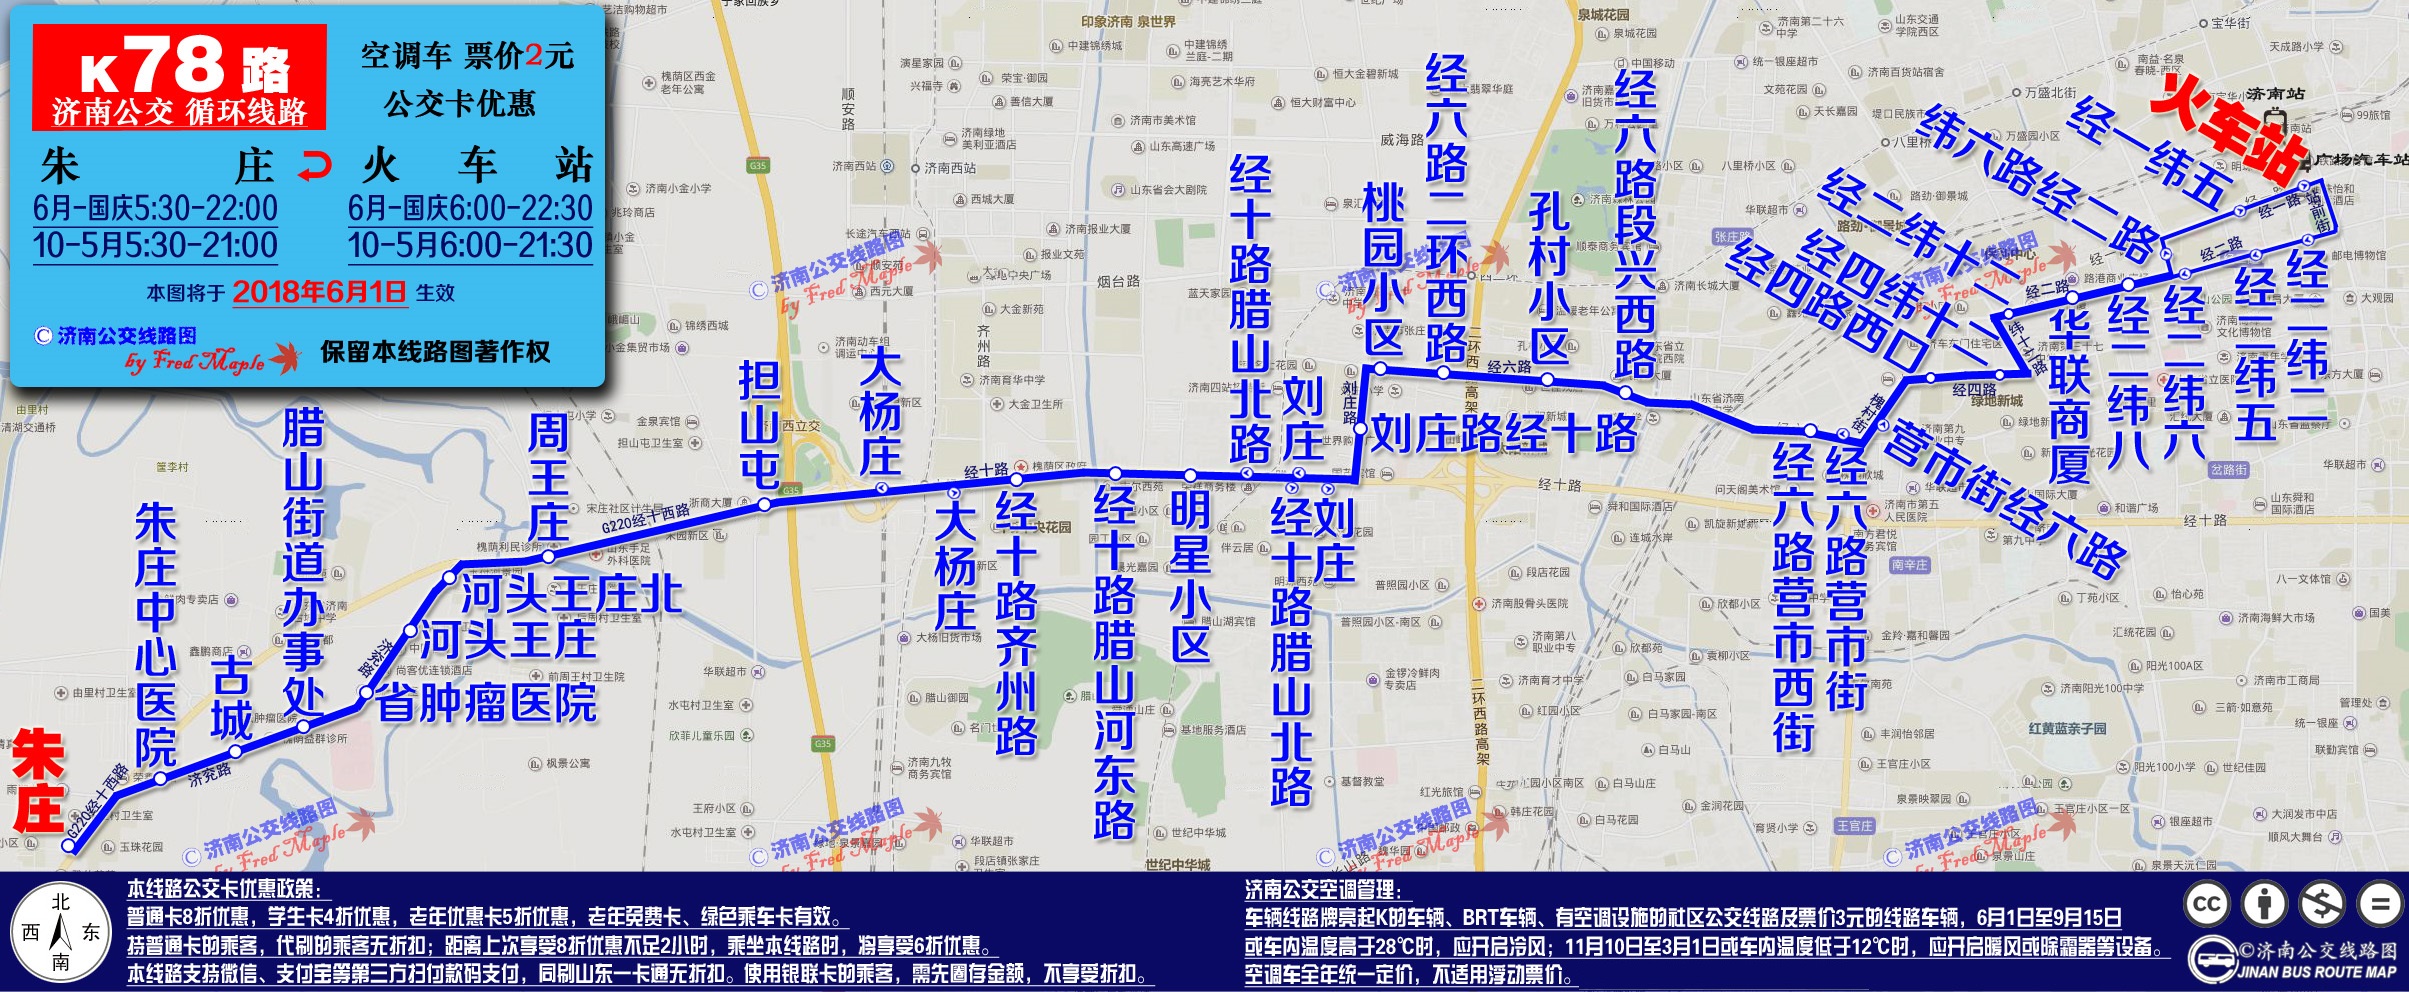 K78線路圖